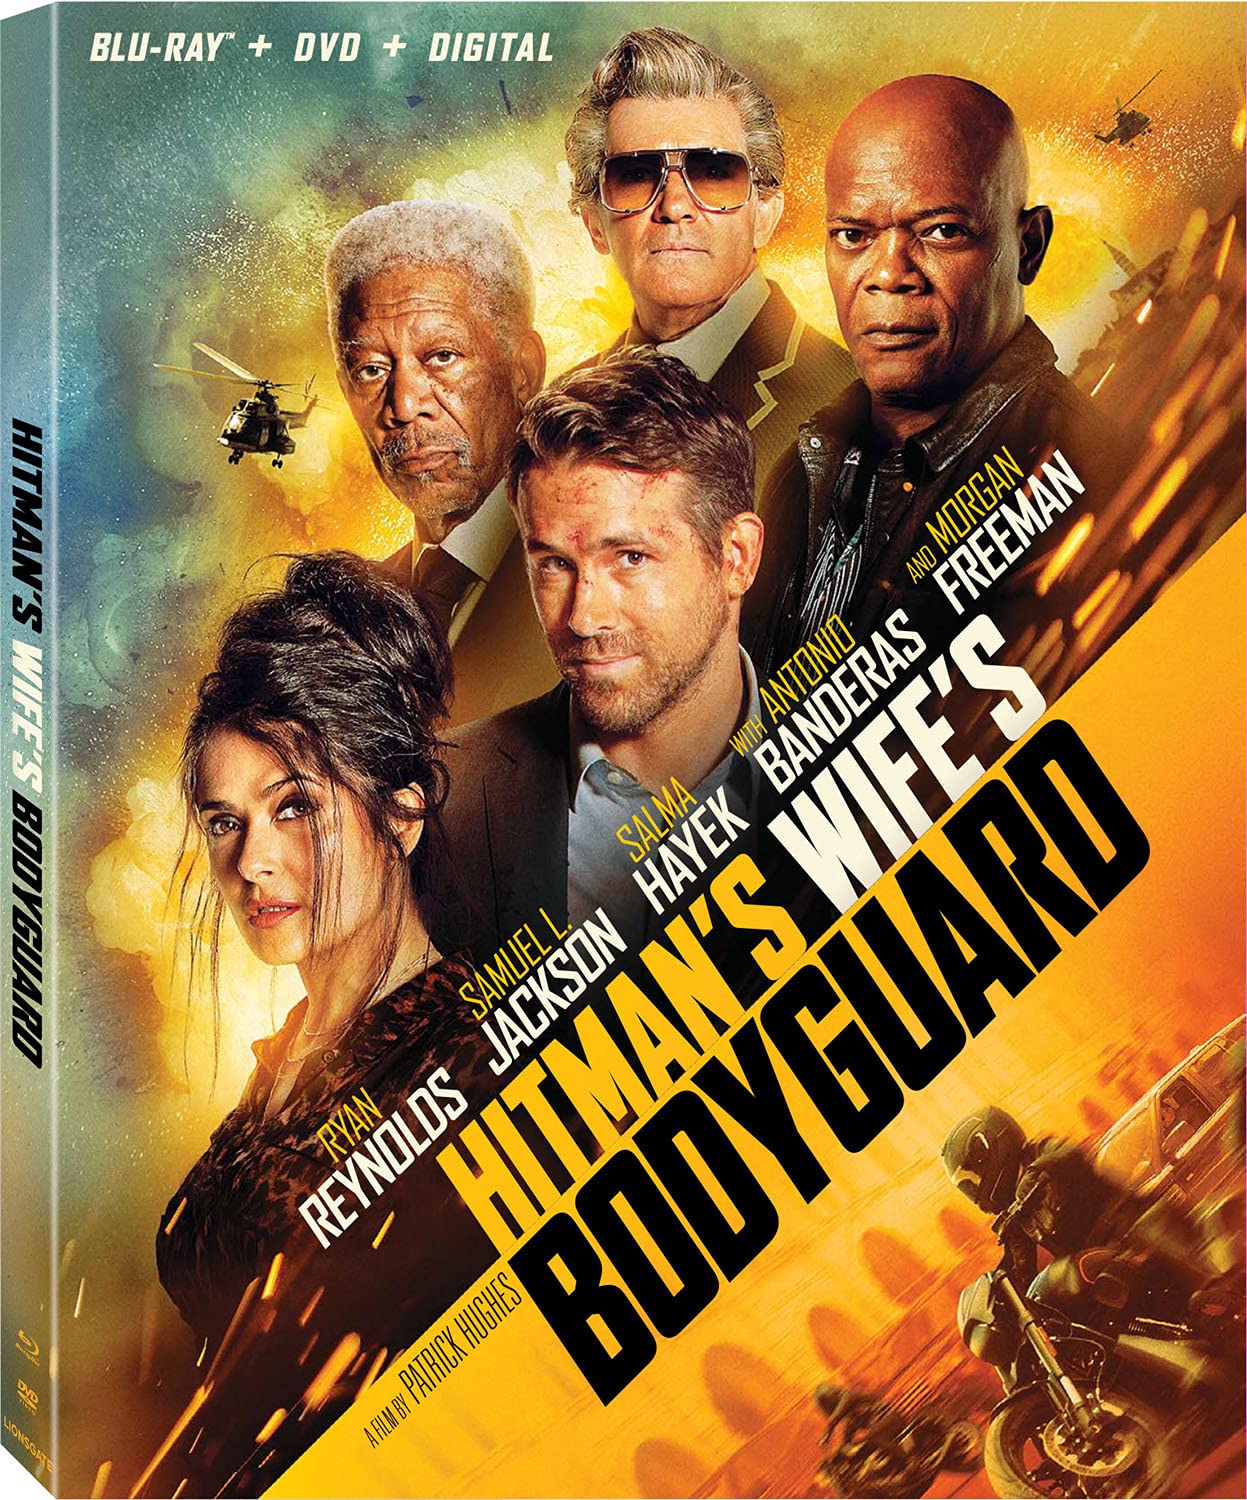 Morgan Freeman In The Hitman'S Wife'S Bodyguard Wallpapers